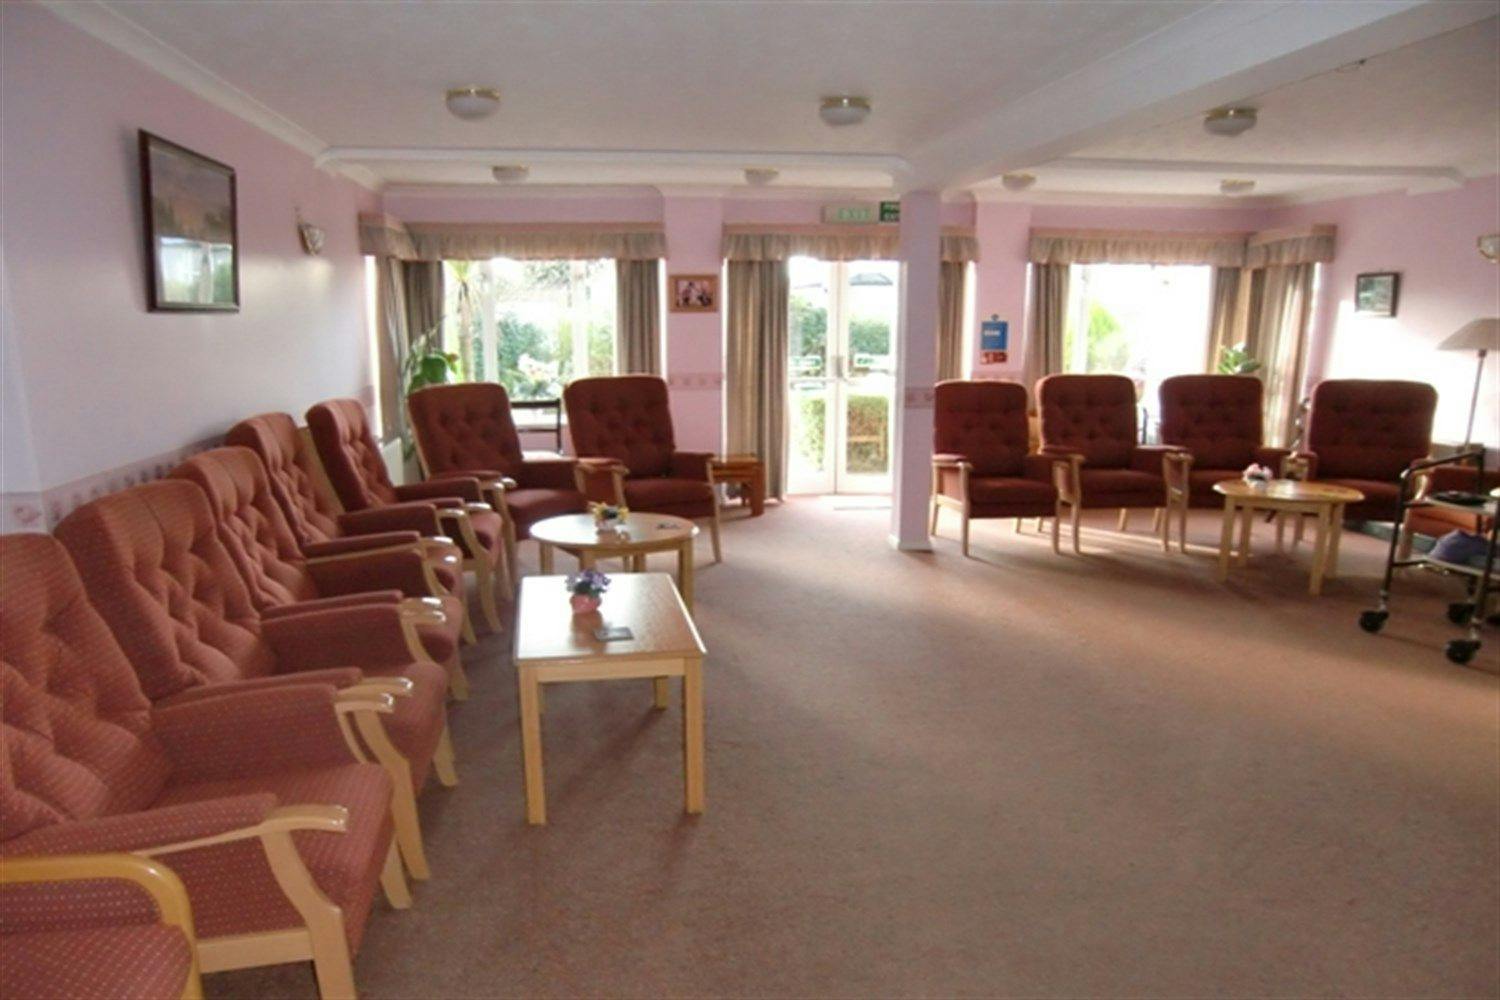 Communal Lounge at Havenvale Retirement Development in Clacton-on-Sea, Essex